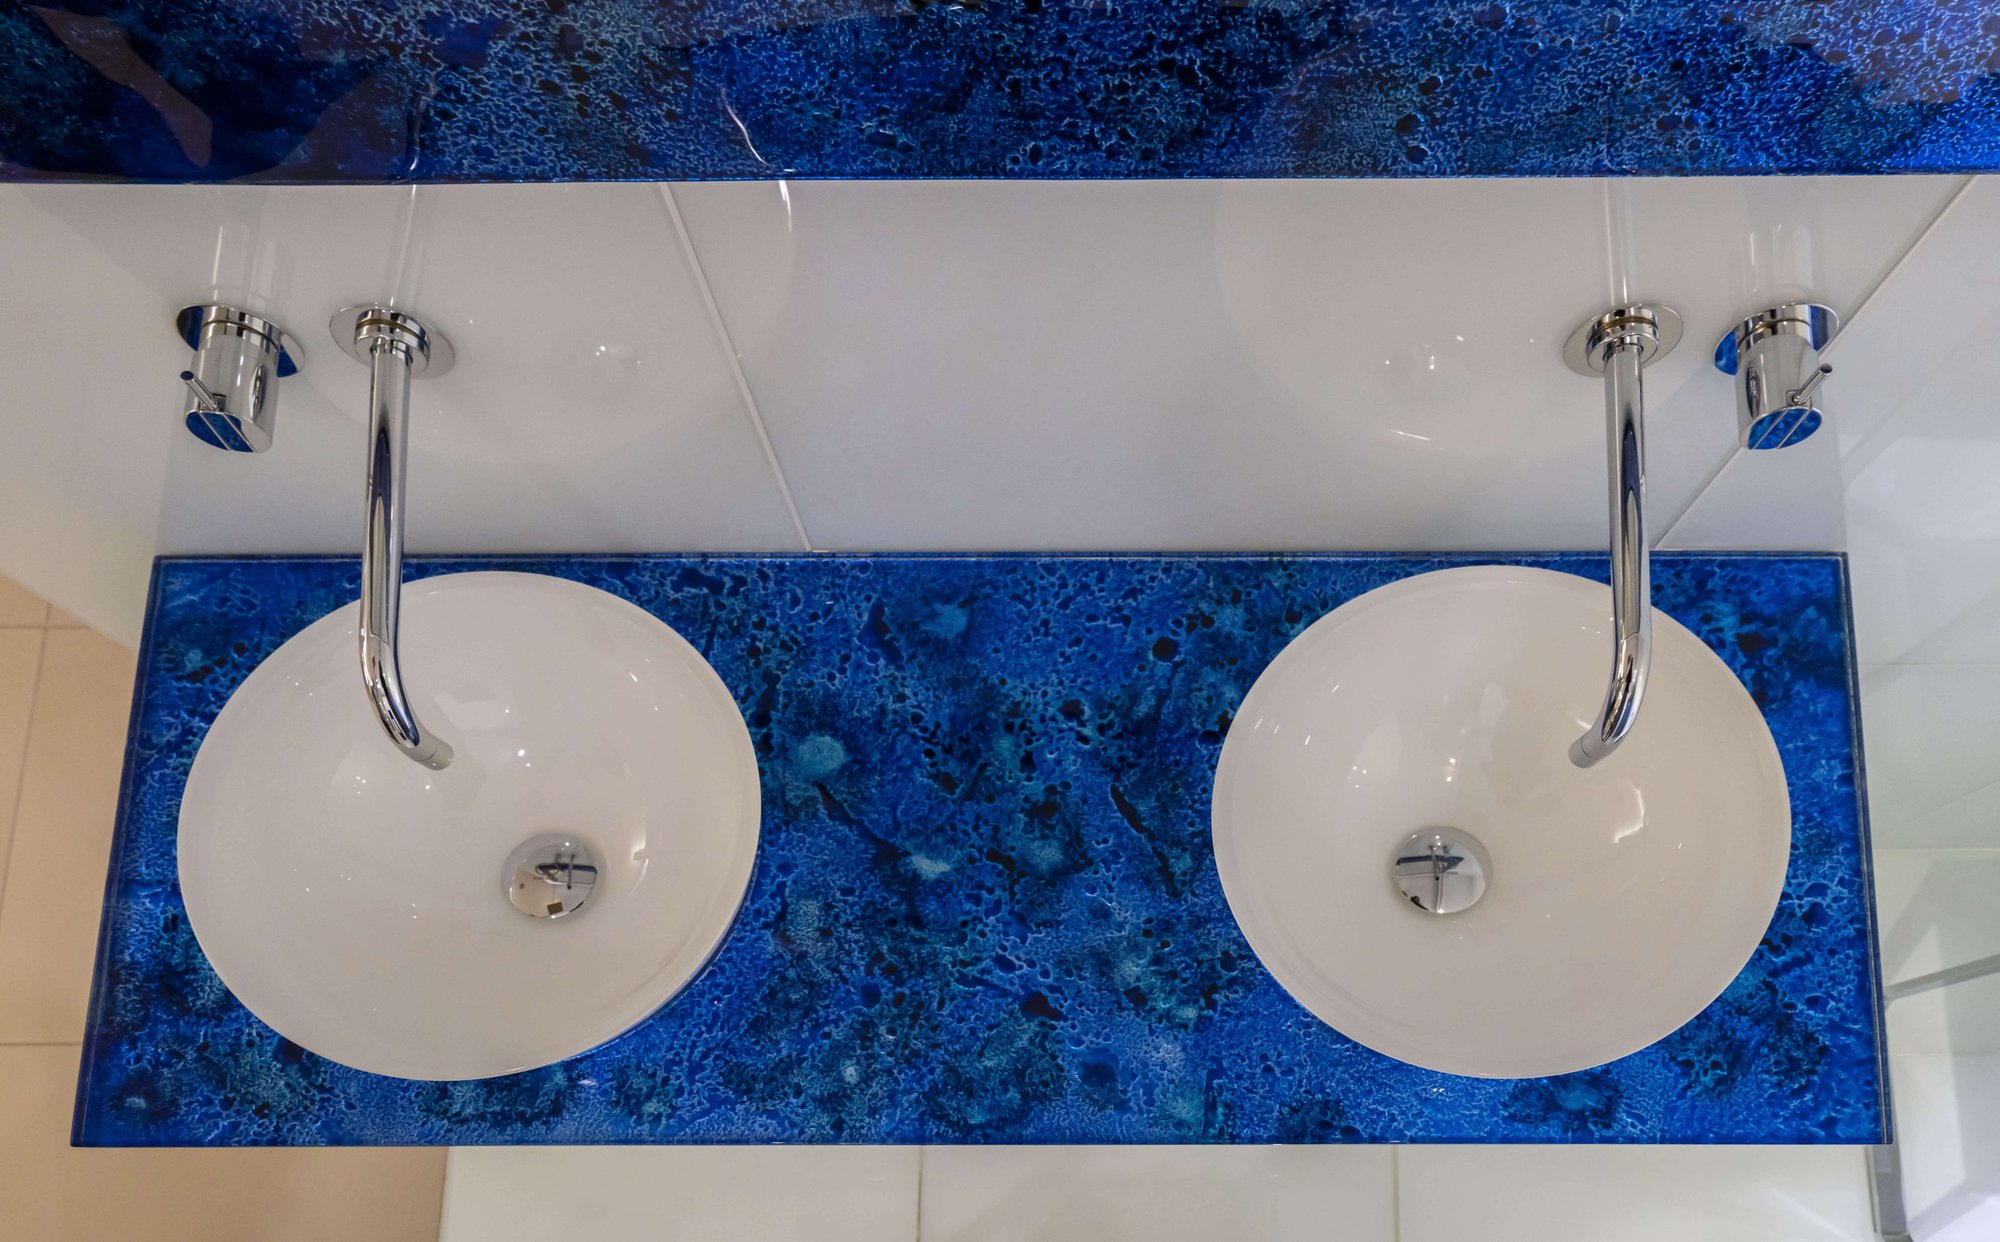 Two basins on an ocean blue glass countertop